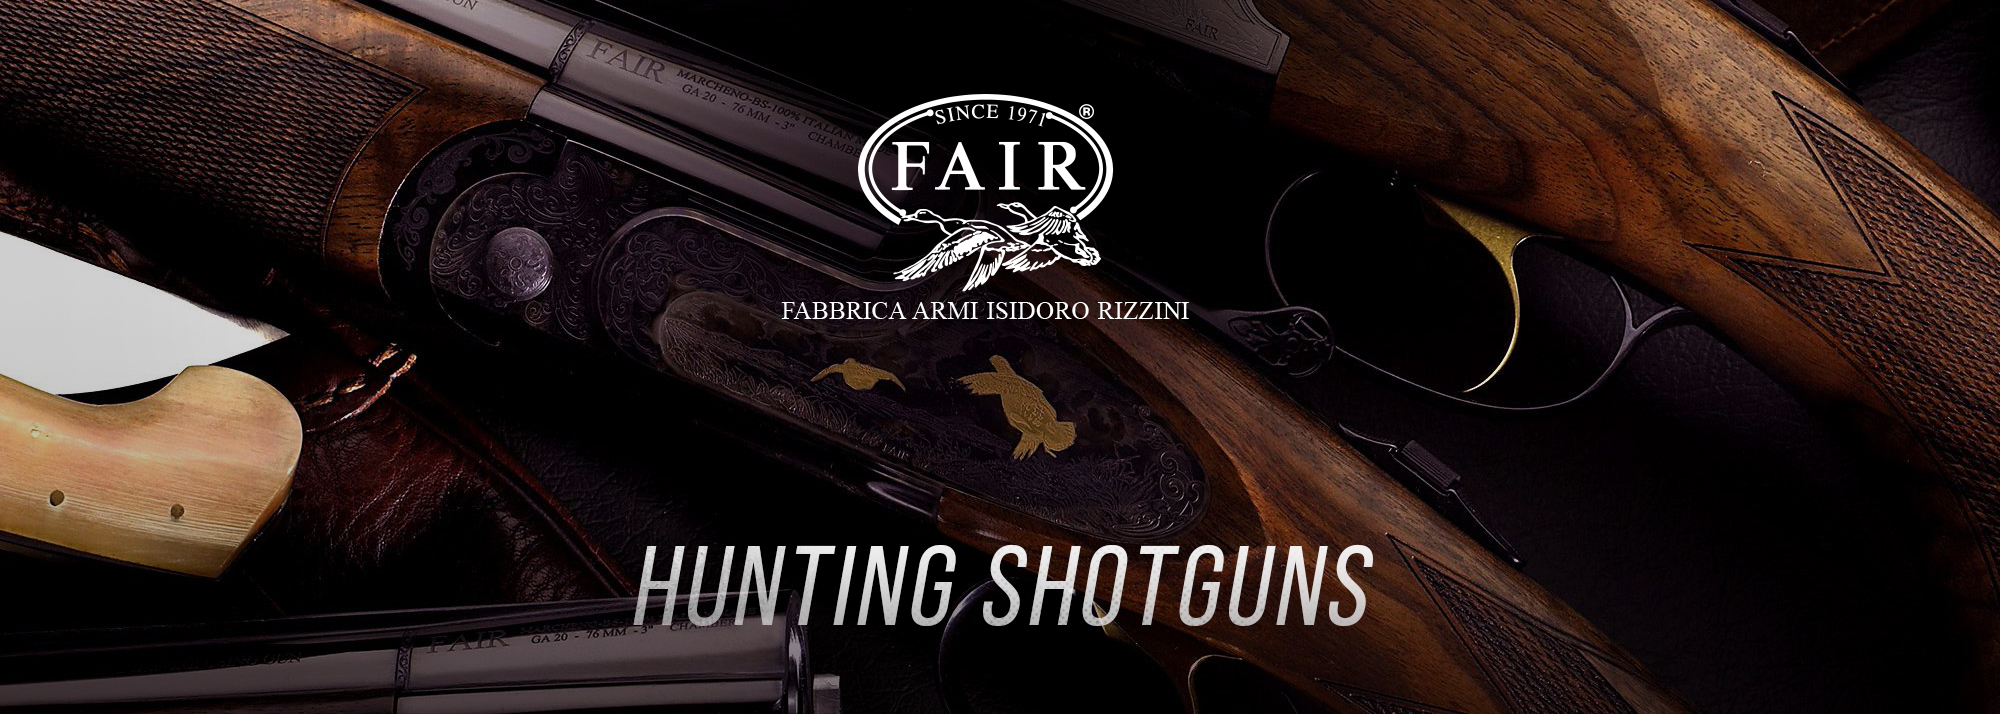 Shotguns Hunting